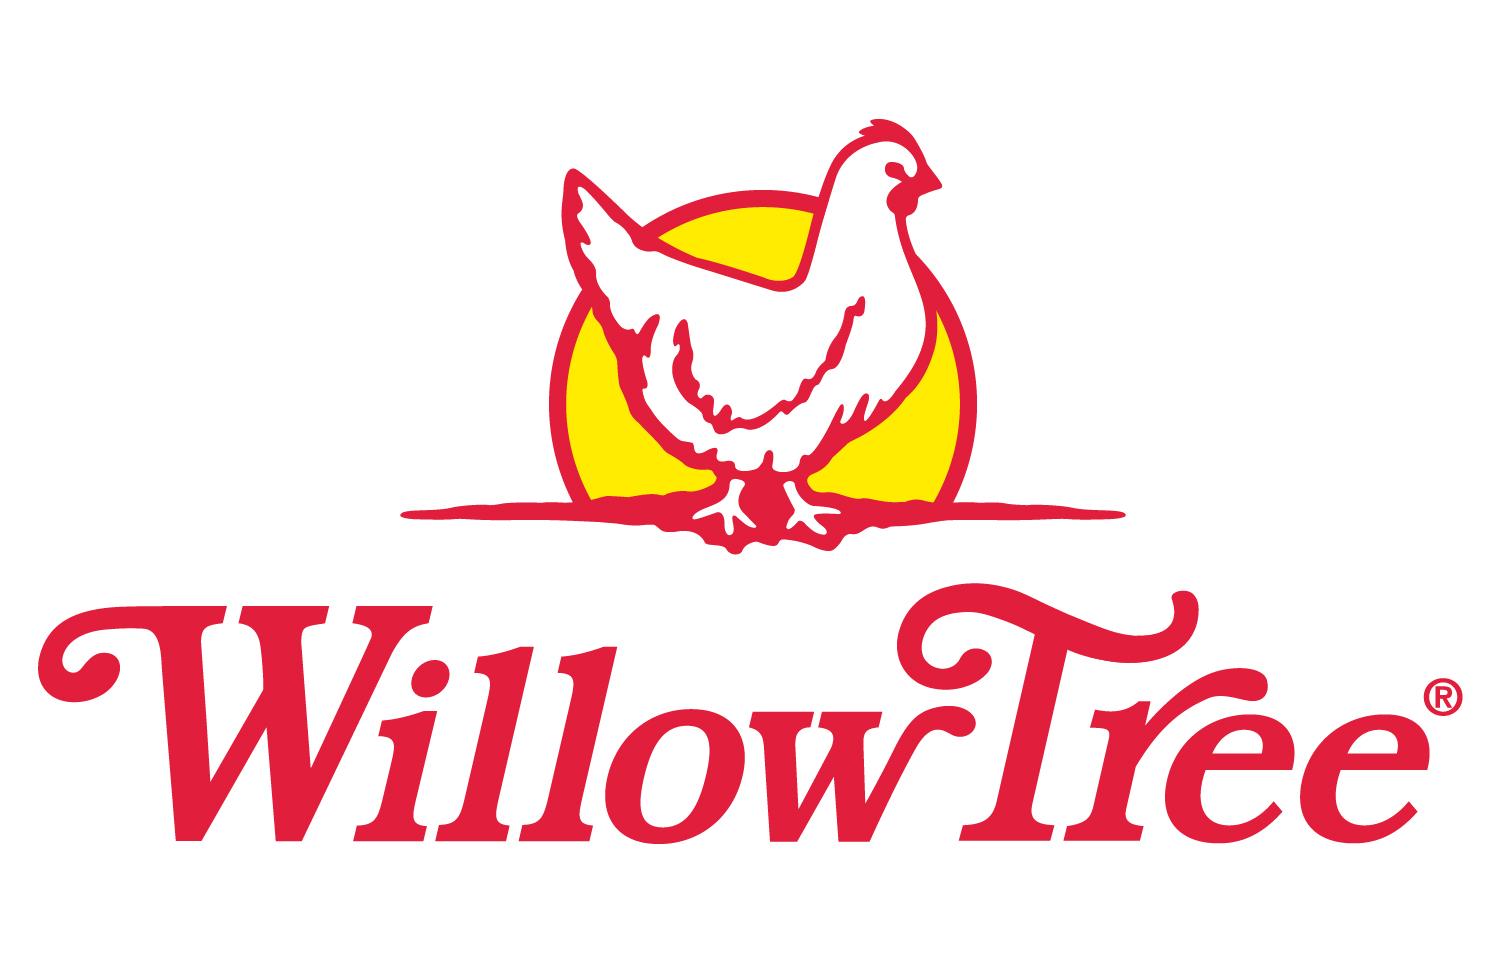 Willow Tree Logo - Image Download - Willow Tree